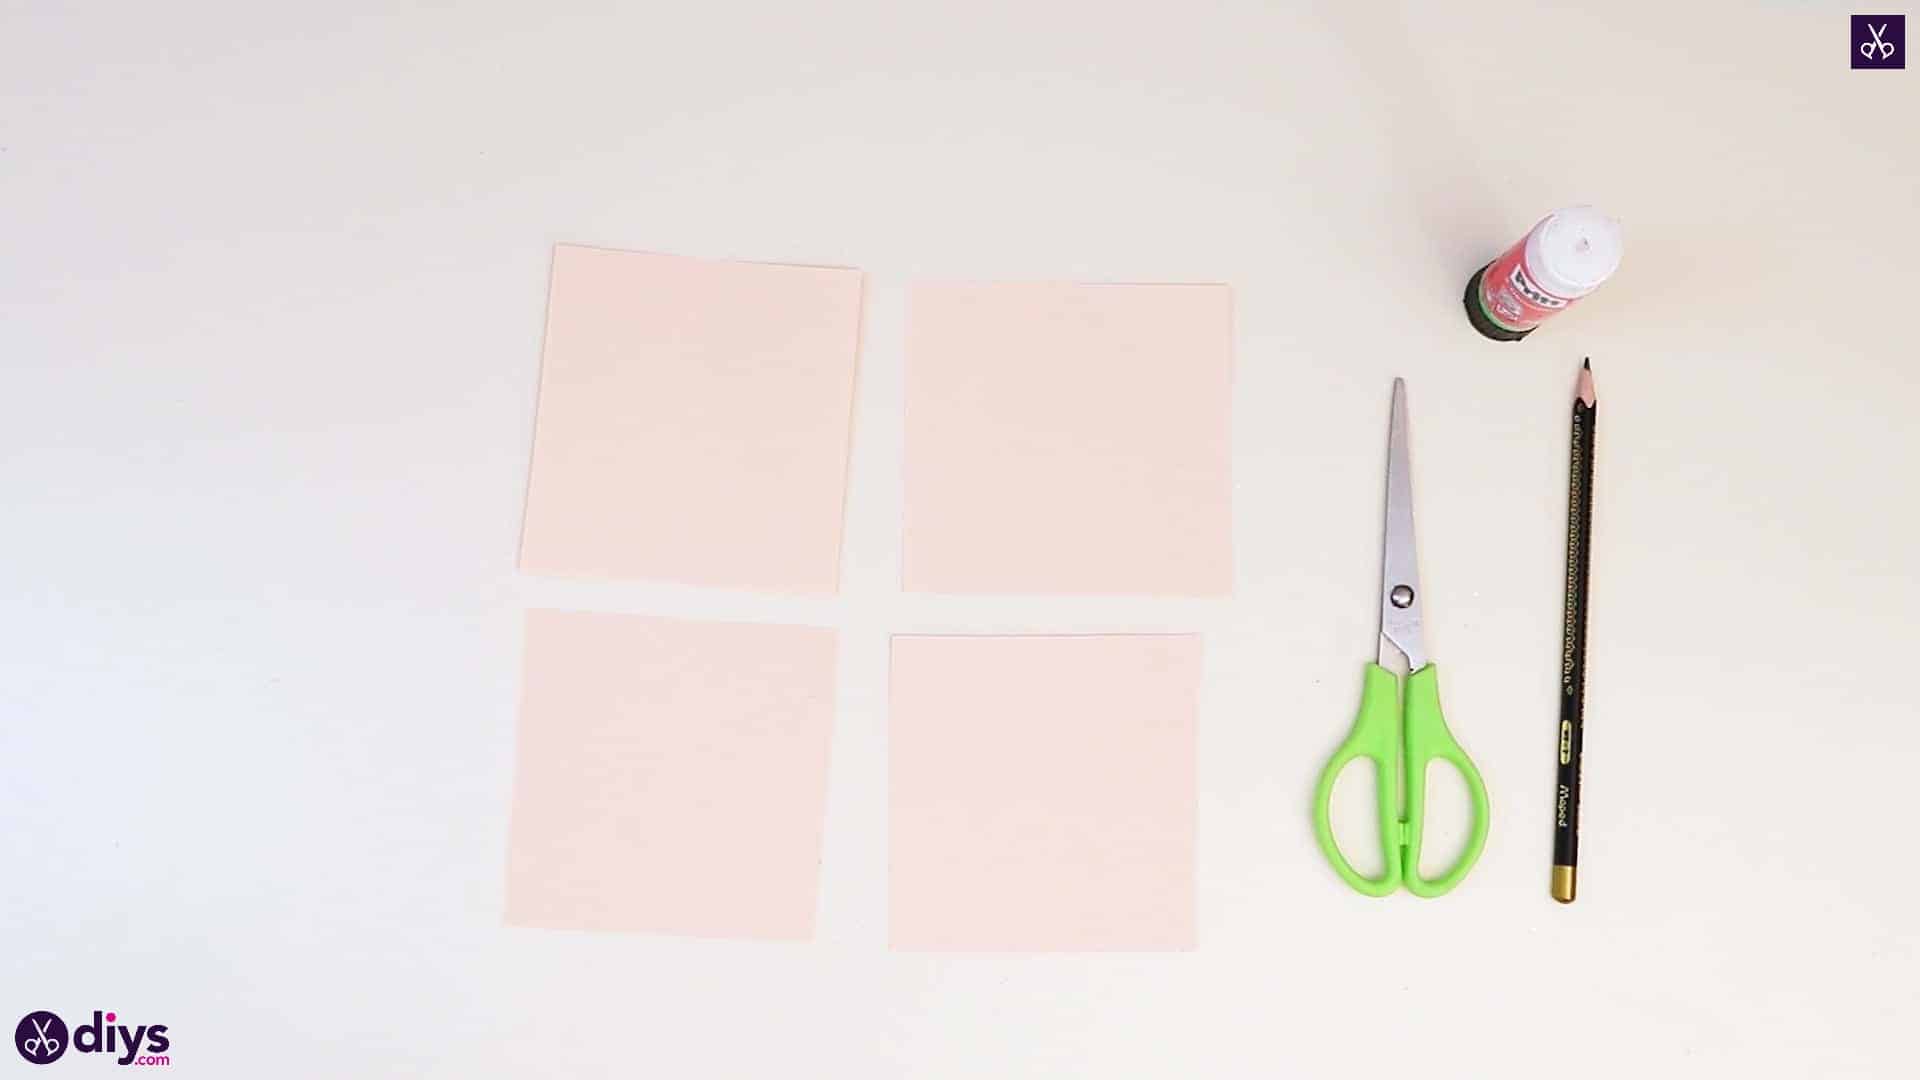 Diy realistic paper rose cutting